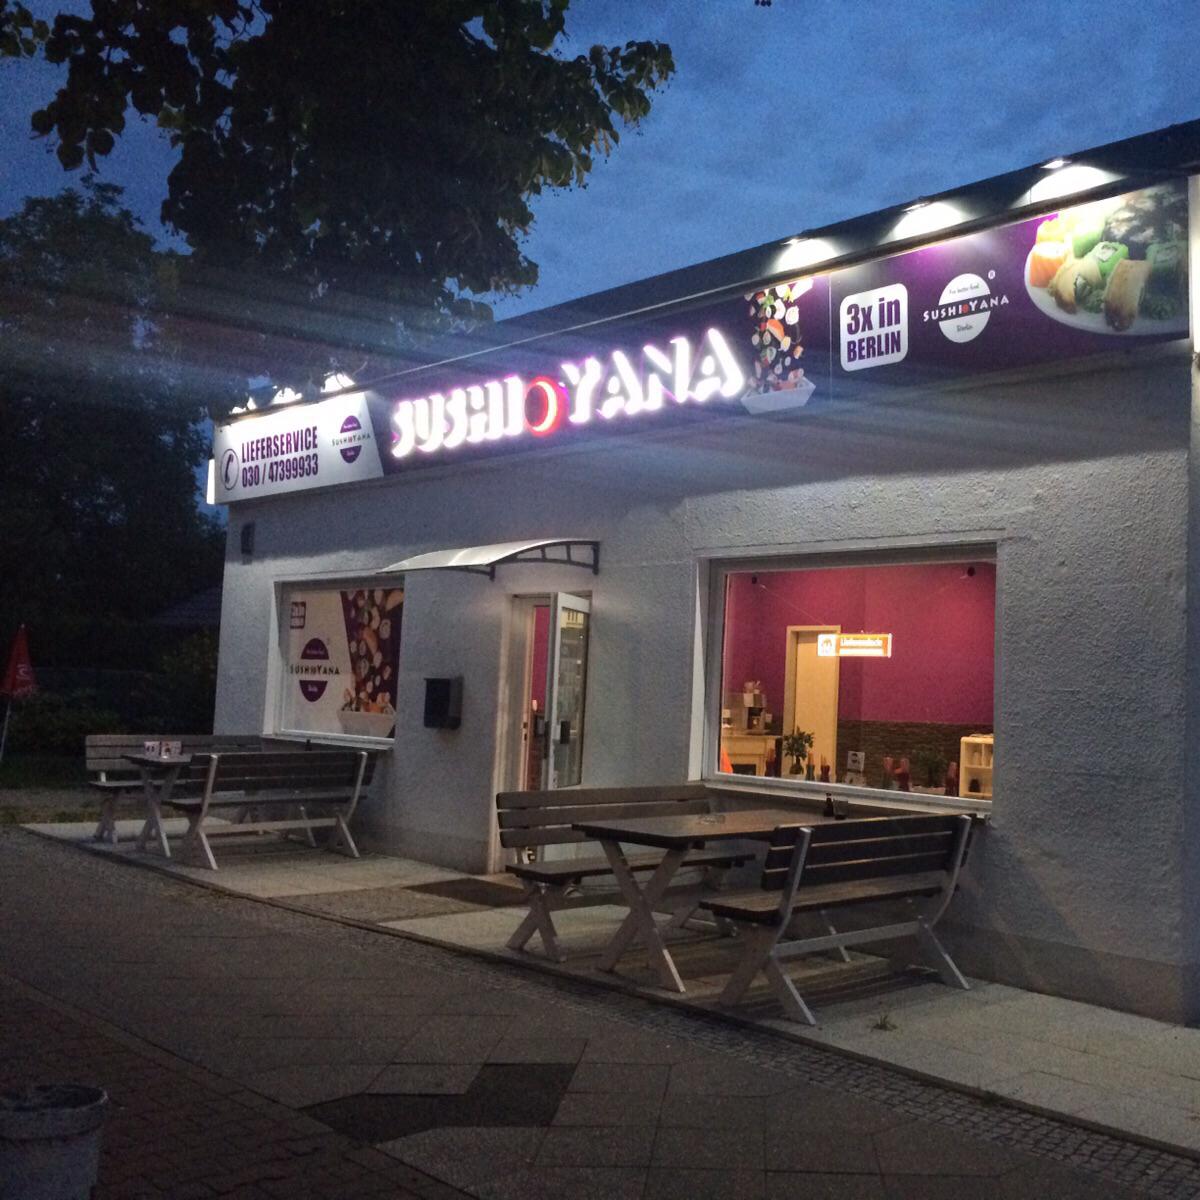 Restaurant "Sushi Yana Rudow" in Berlin